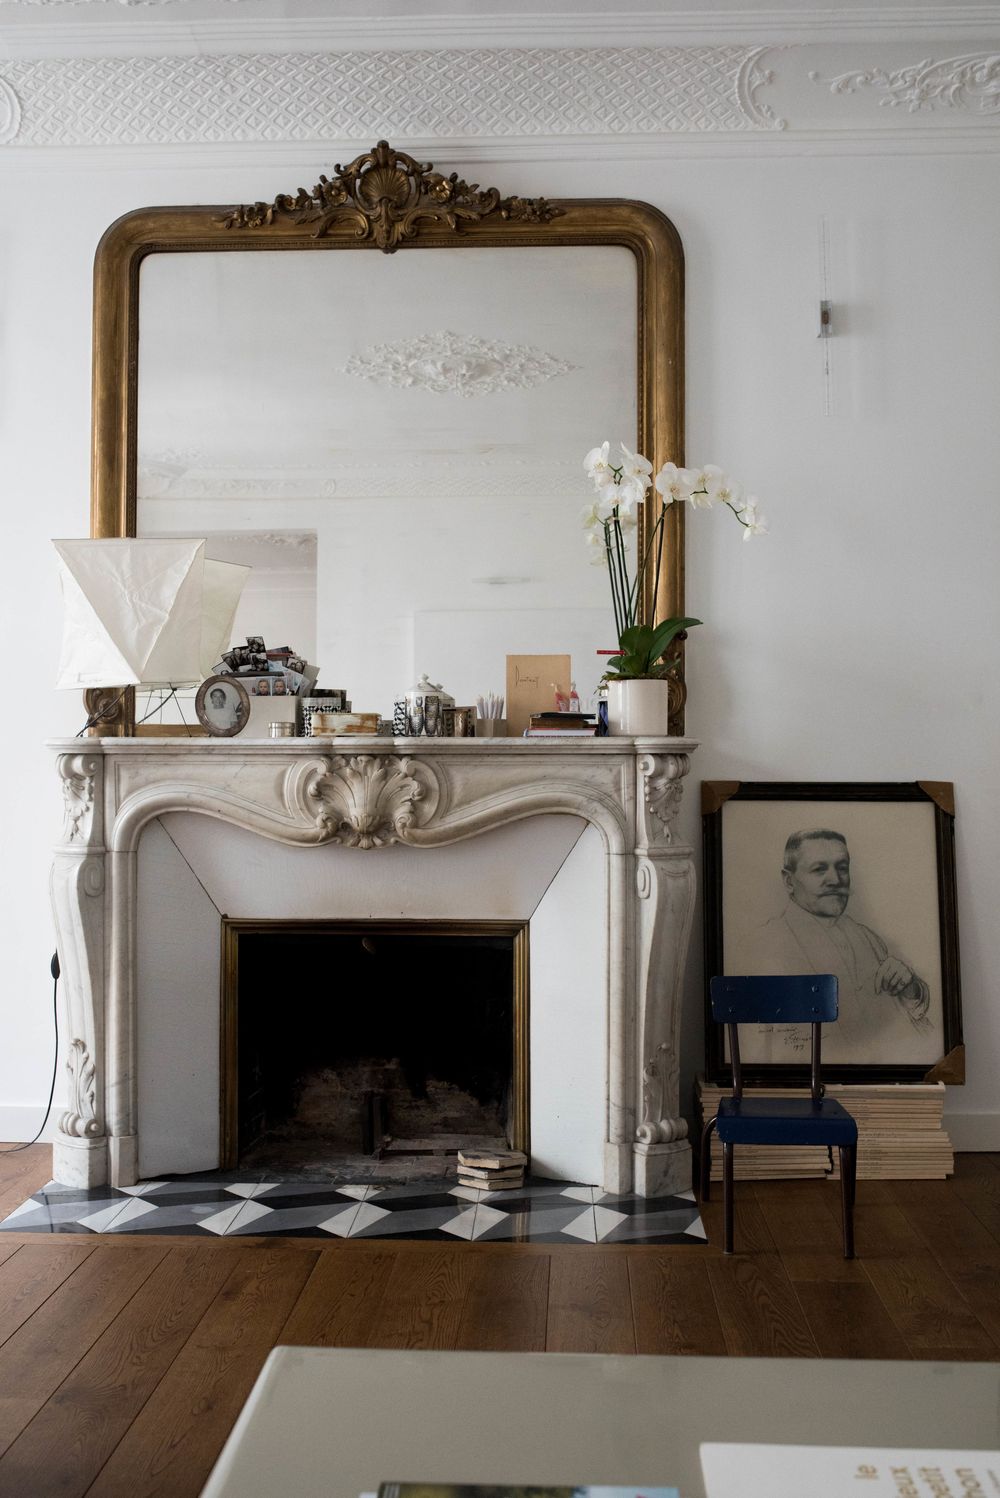 Parisian fireplace with Vintage family photos via houseofvalentina